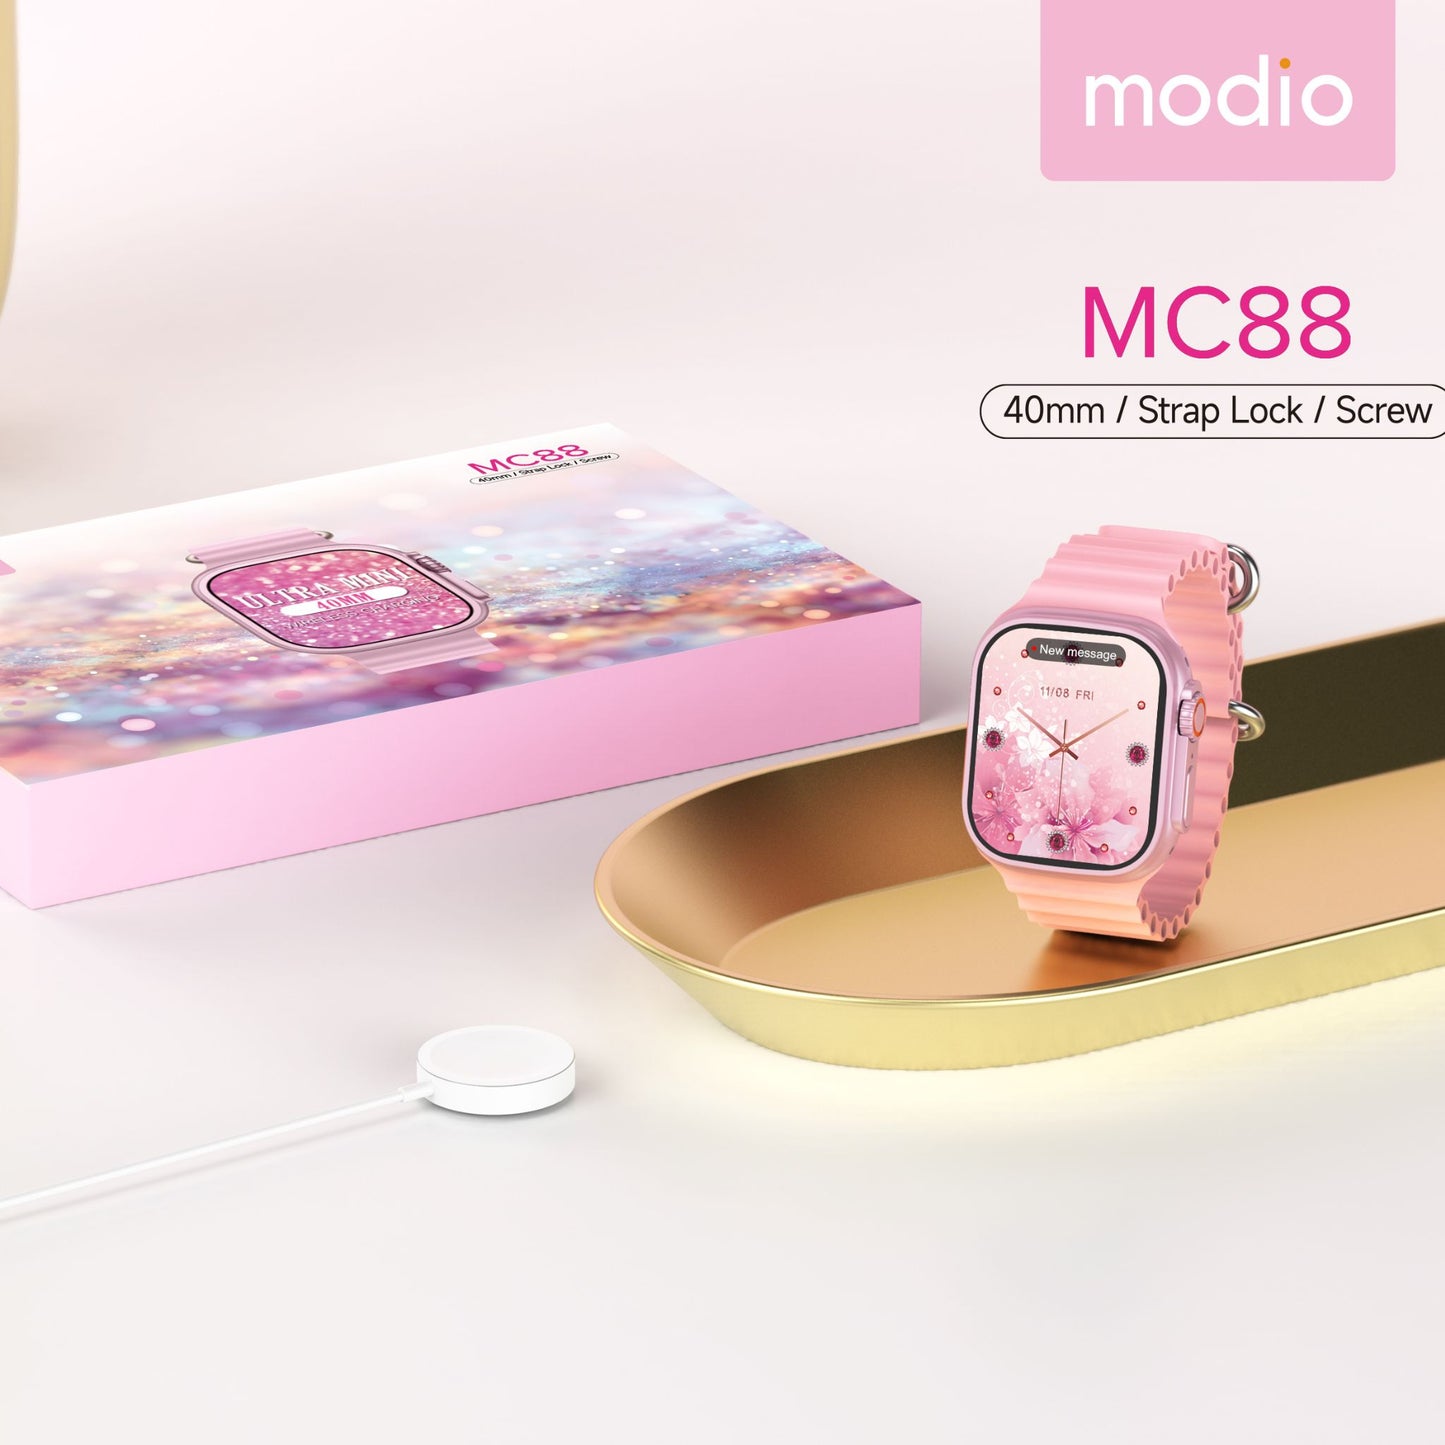 Modio MC88 Ultra Mini 36 MM Wireless Charging_Strap Lock_Screw Model Smartwatches_Pink